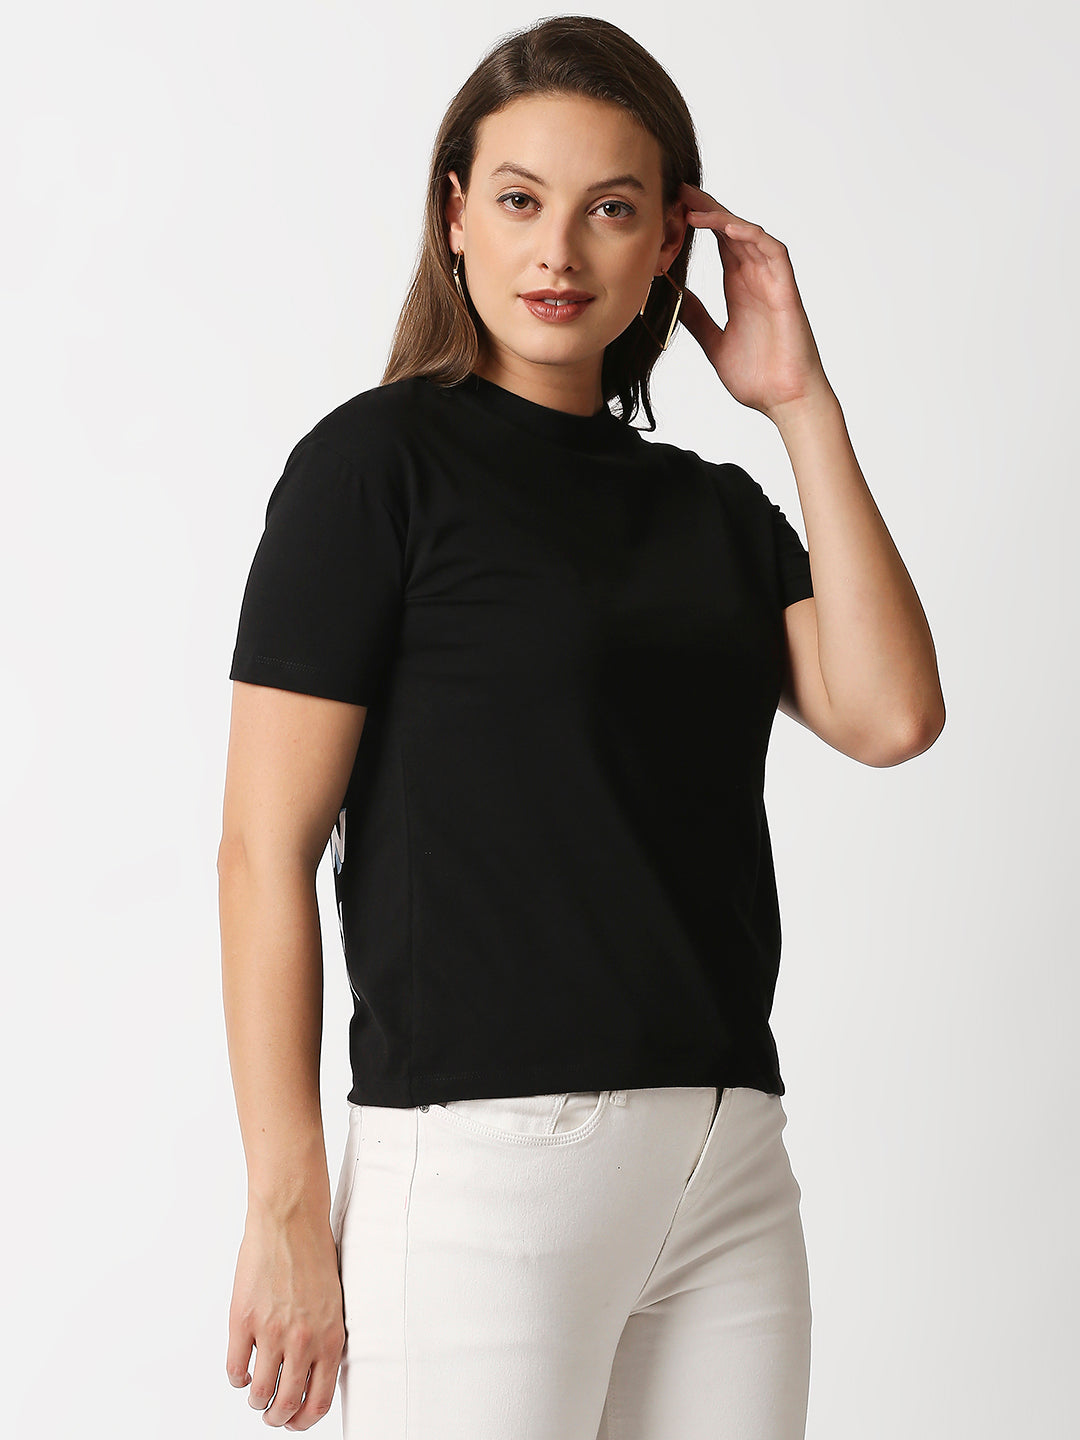 Buy Womenâ€™s Black Comfort fit Back print T-shirt.